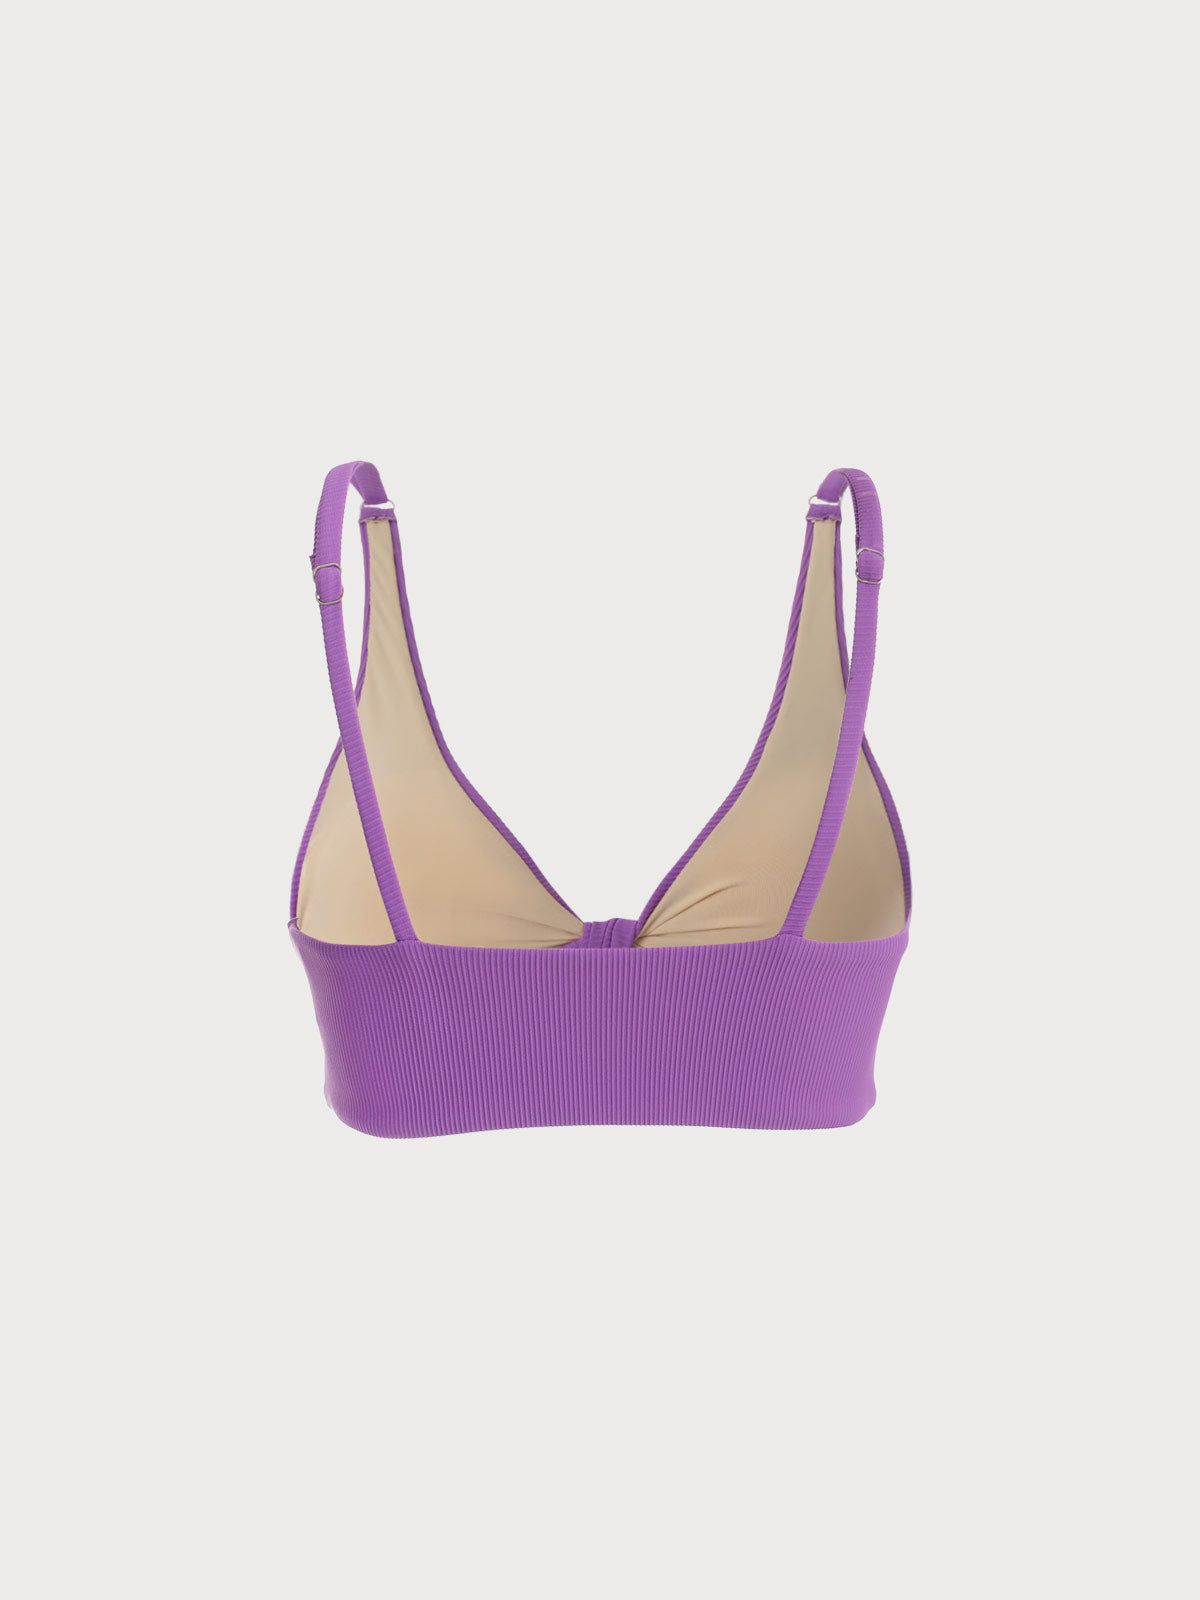 Women's Plain Low Cut Neck Lilac Purple Sports Bras S (4) 